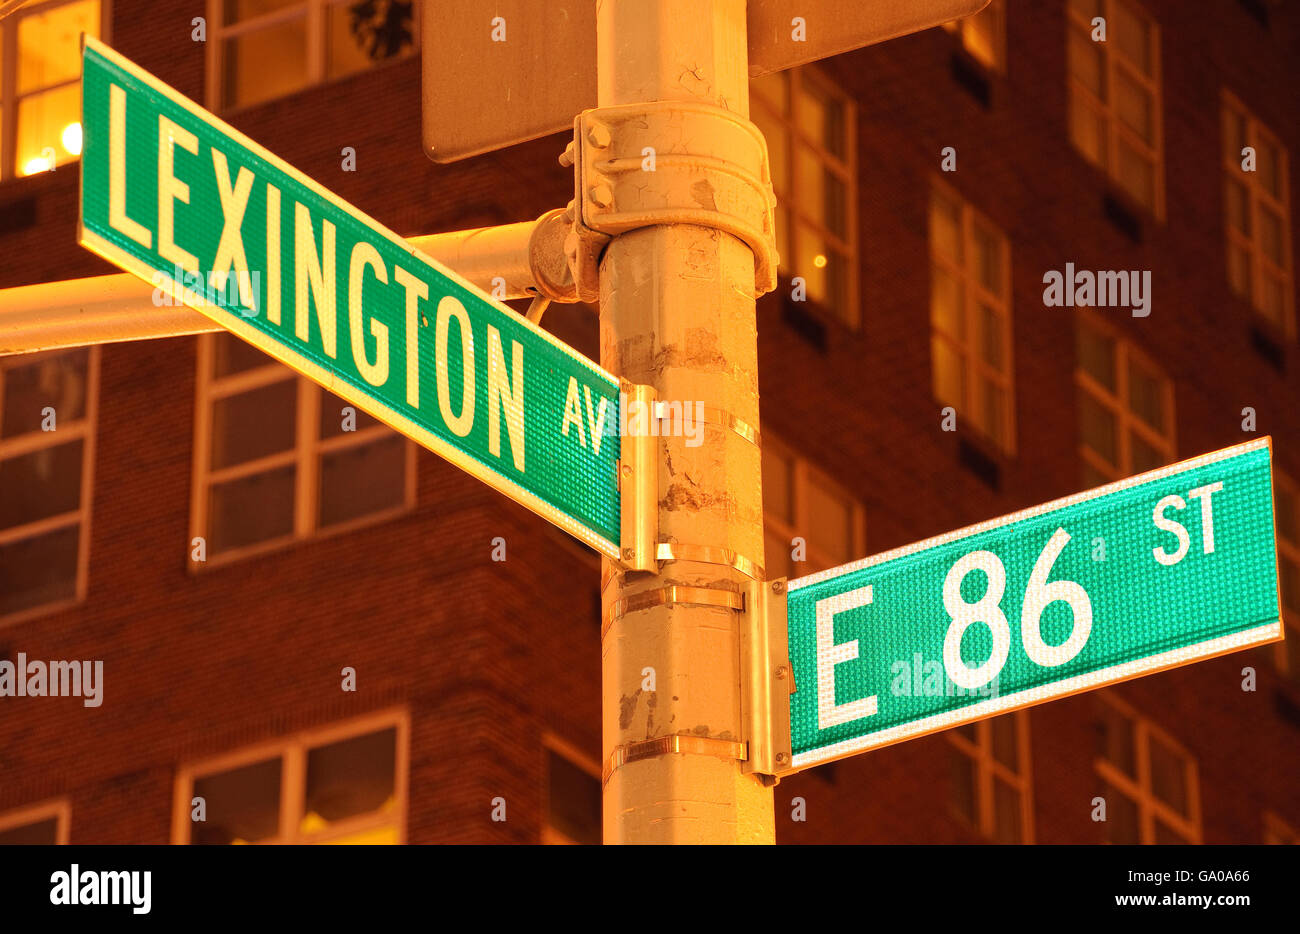 Lexington Avenue, street sign, New York City, New York, USA Banque D'Images